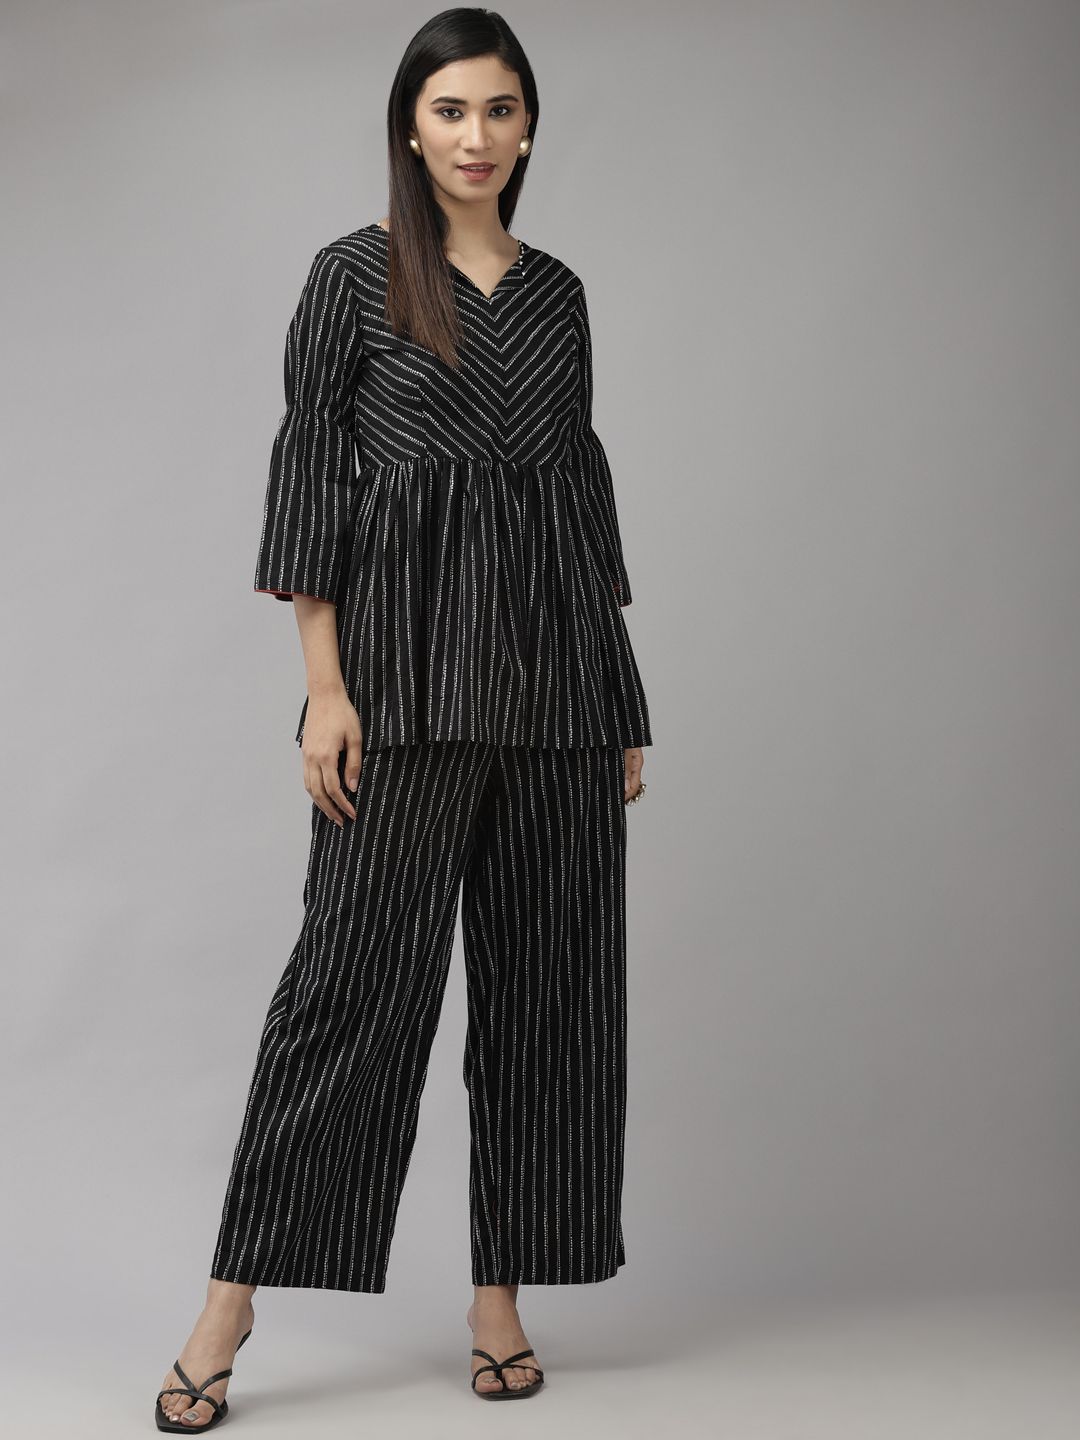 Indo Era Women Black & White Striped A-line Tunic With Trouser Set Price in India